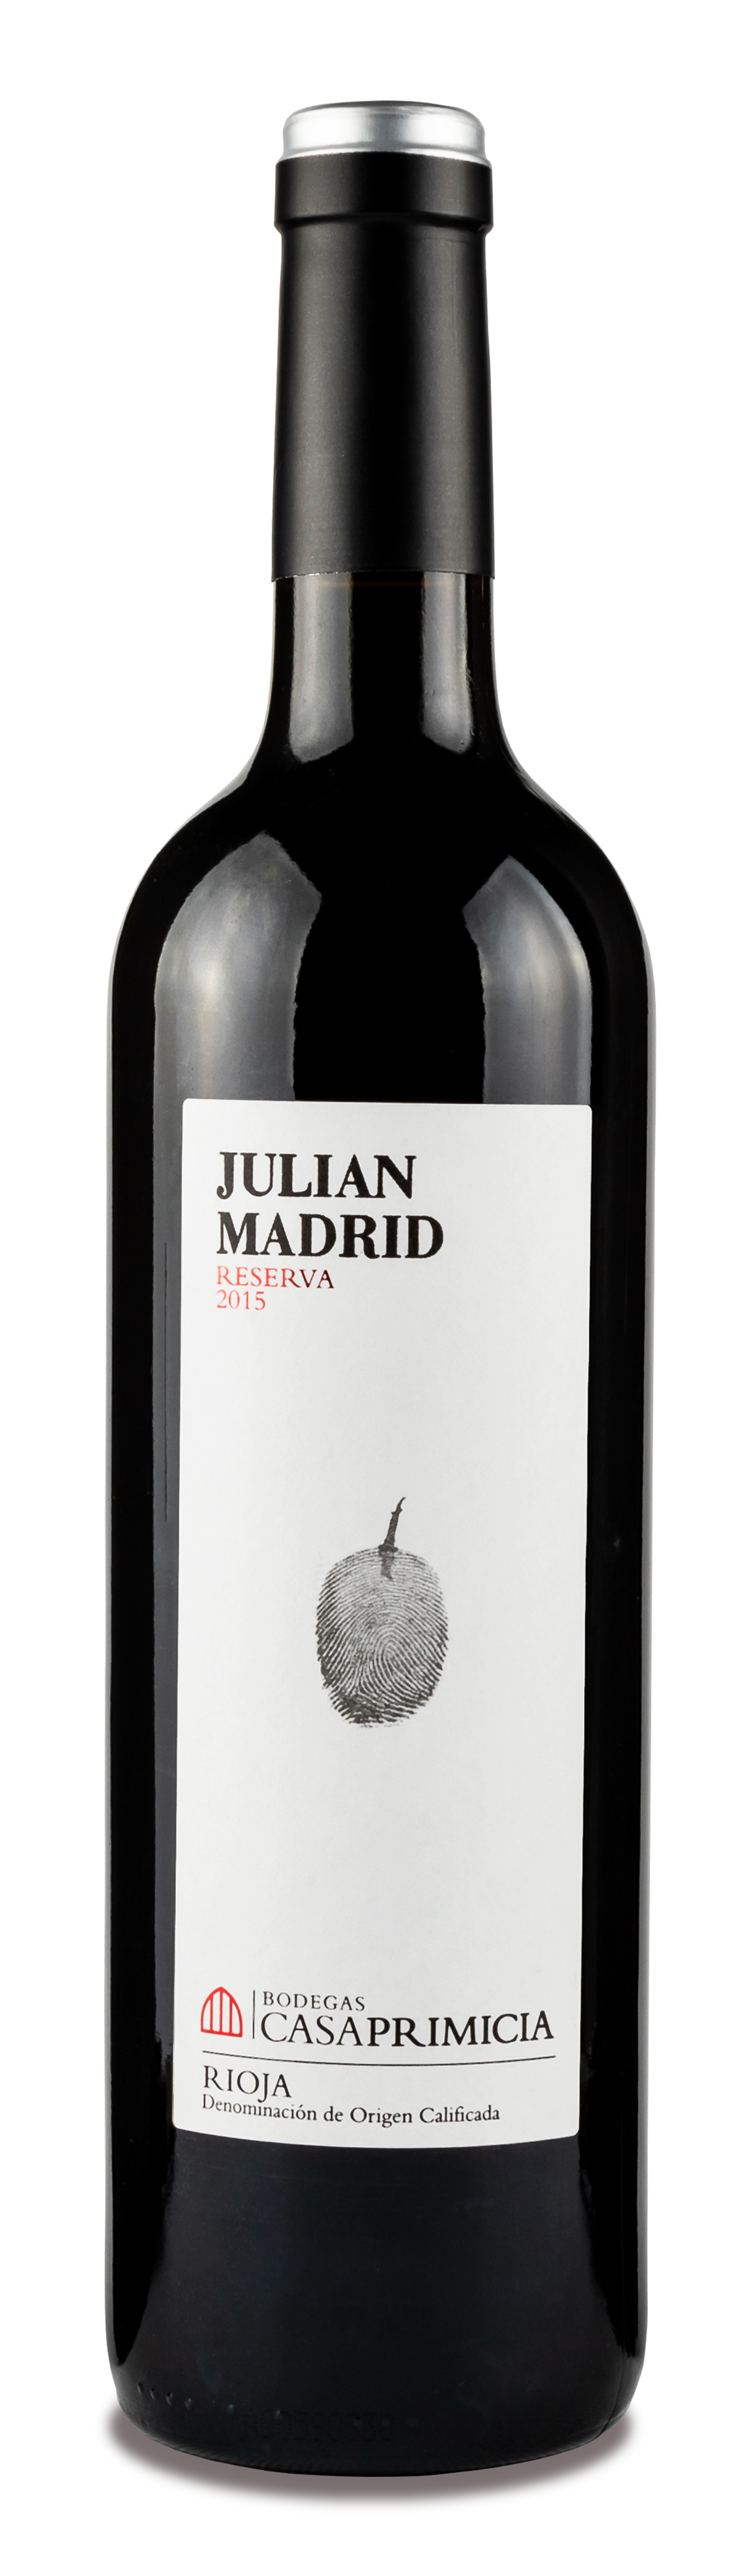 Julian Madrid Reserva 2015